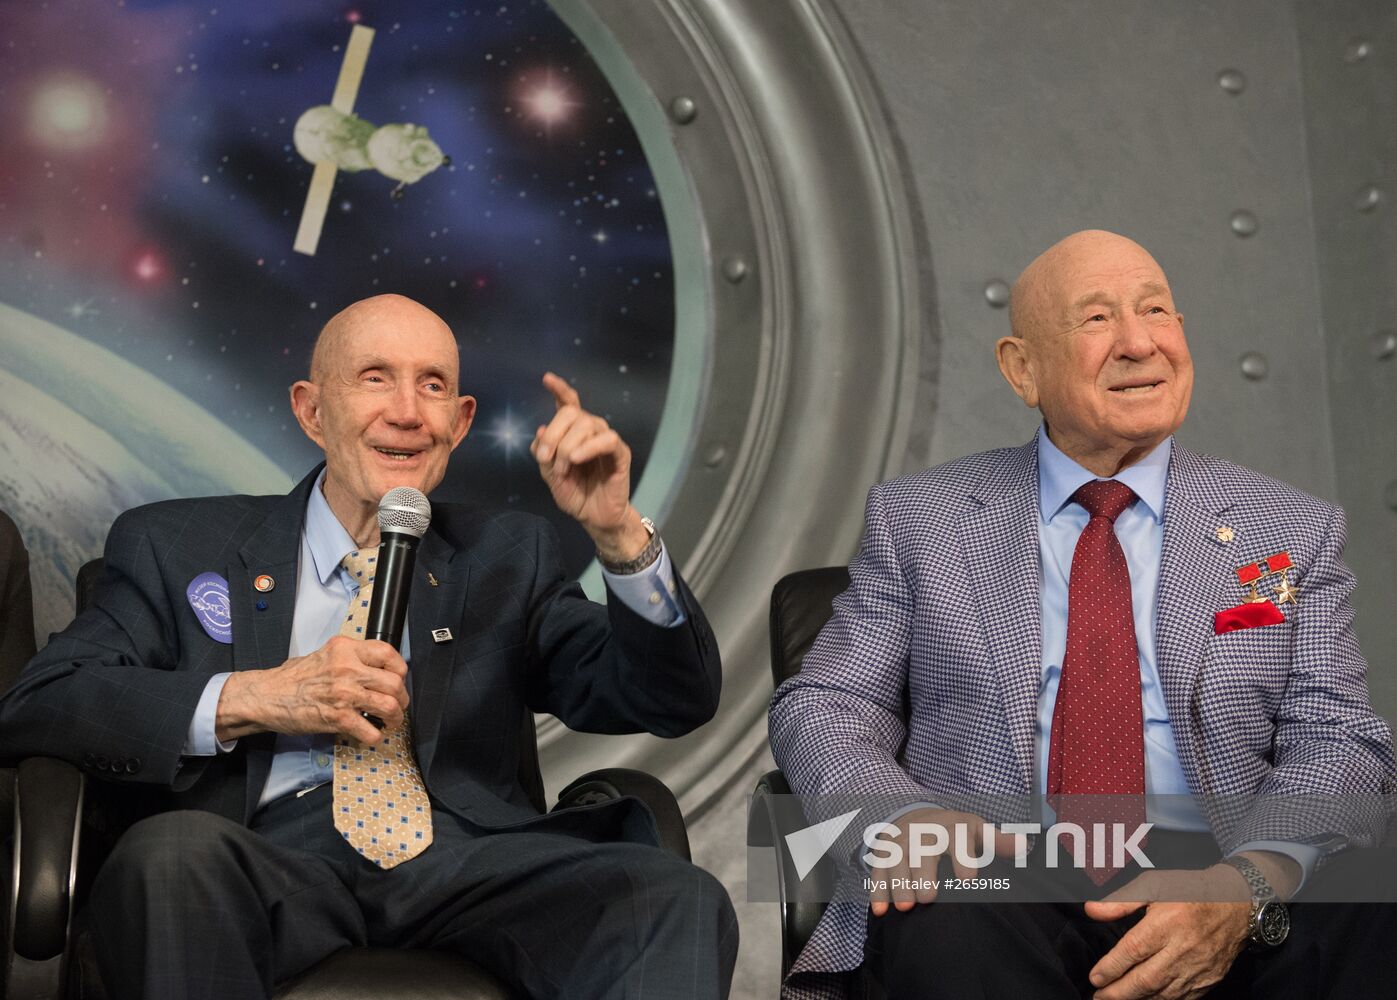 Soyuz-Apollo mission participants reunite in Moscow